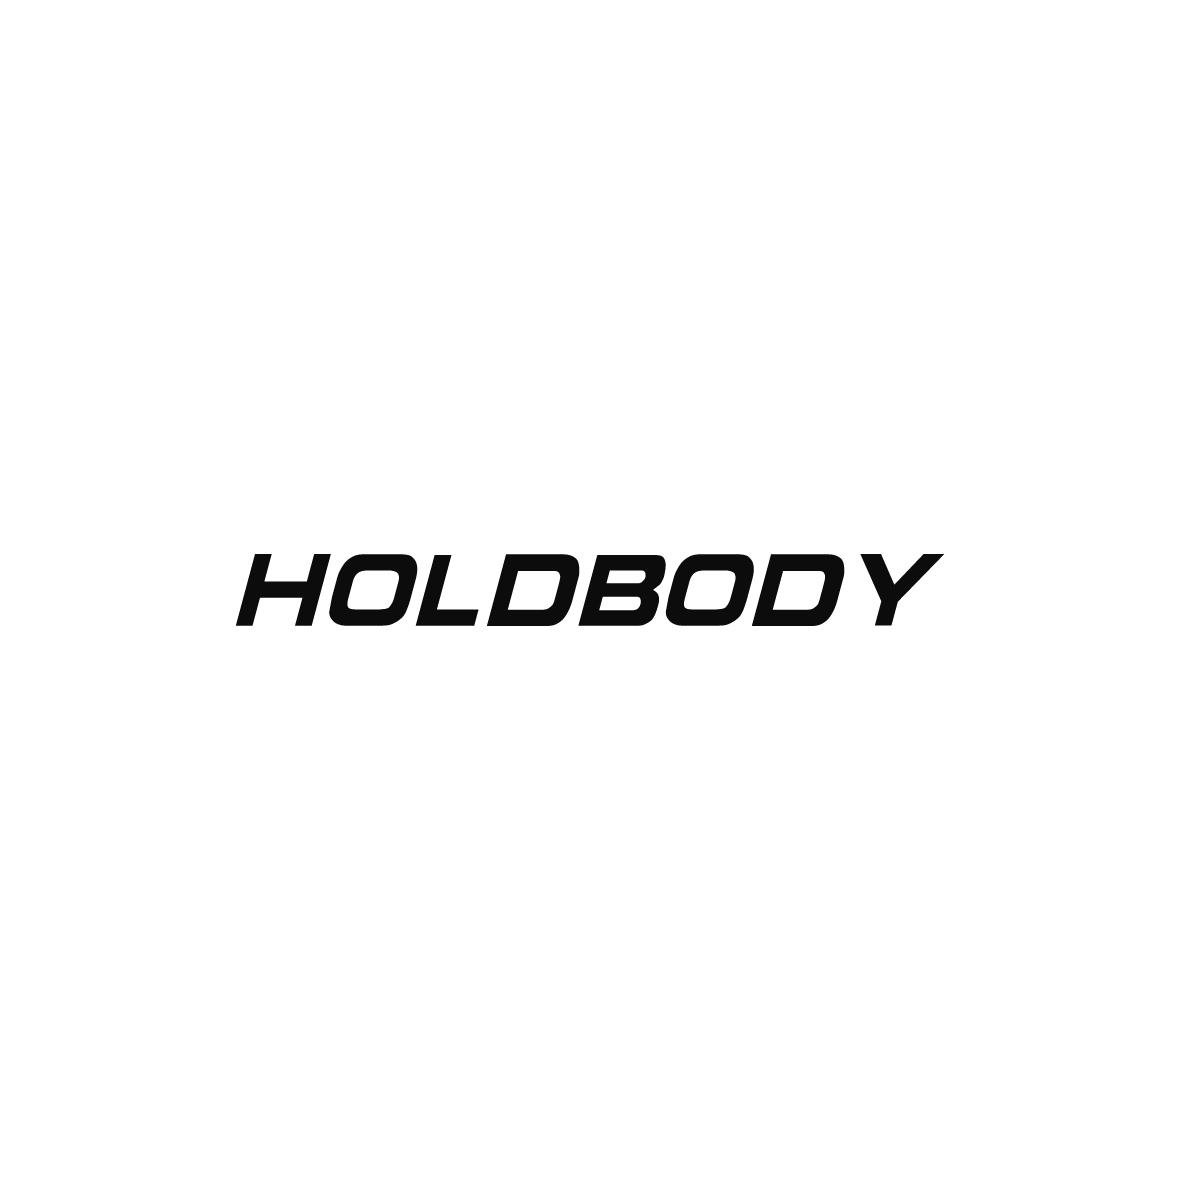 HOLDBODY文娱节目商标转让费用买卖交易流程